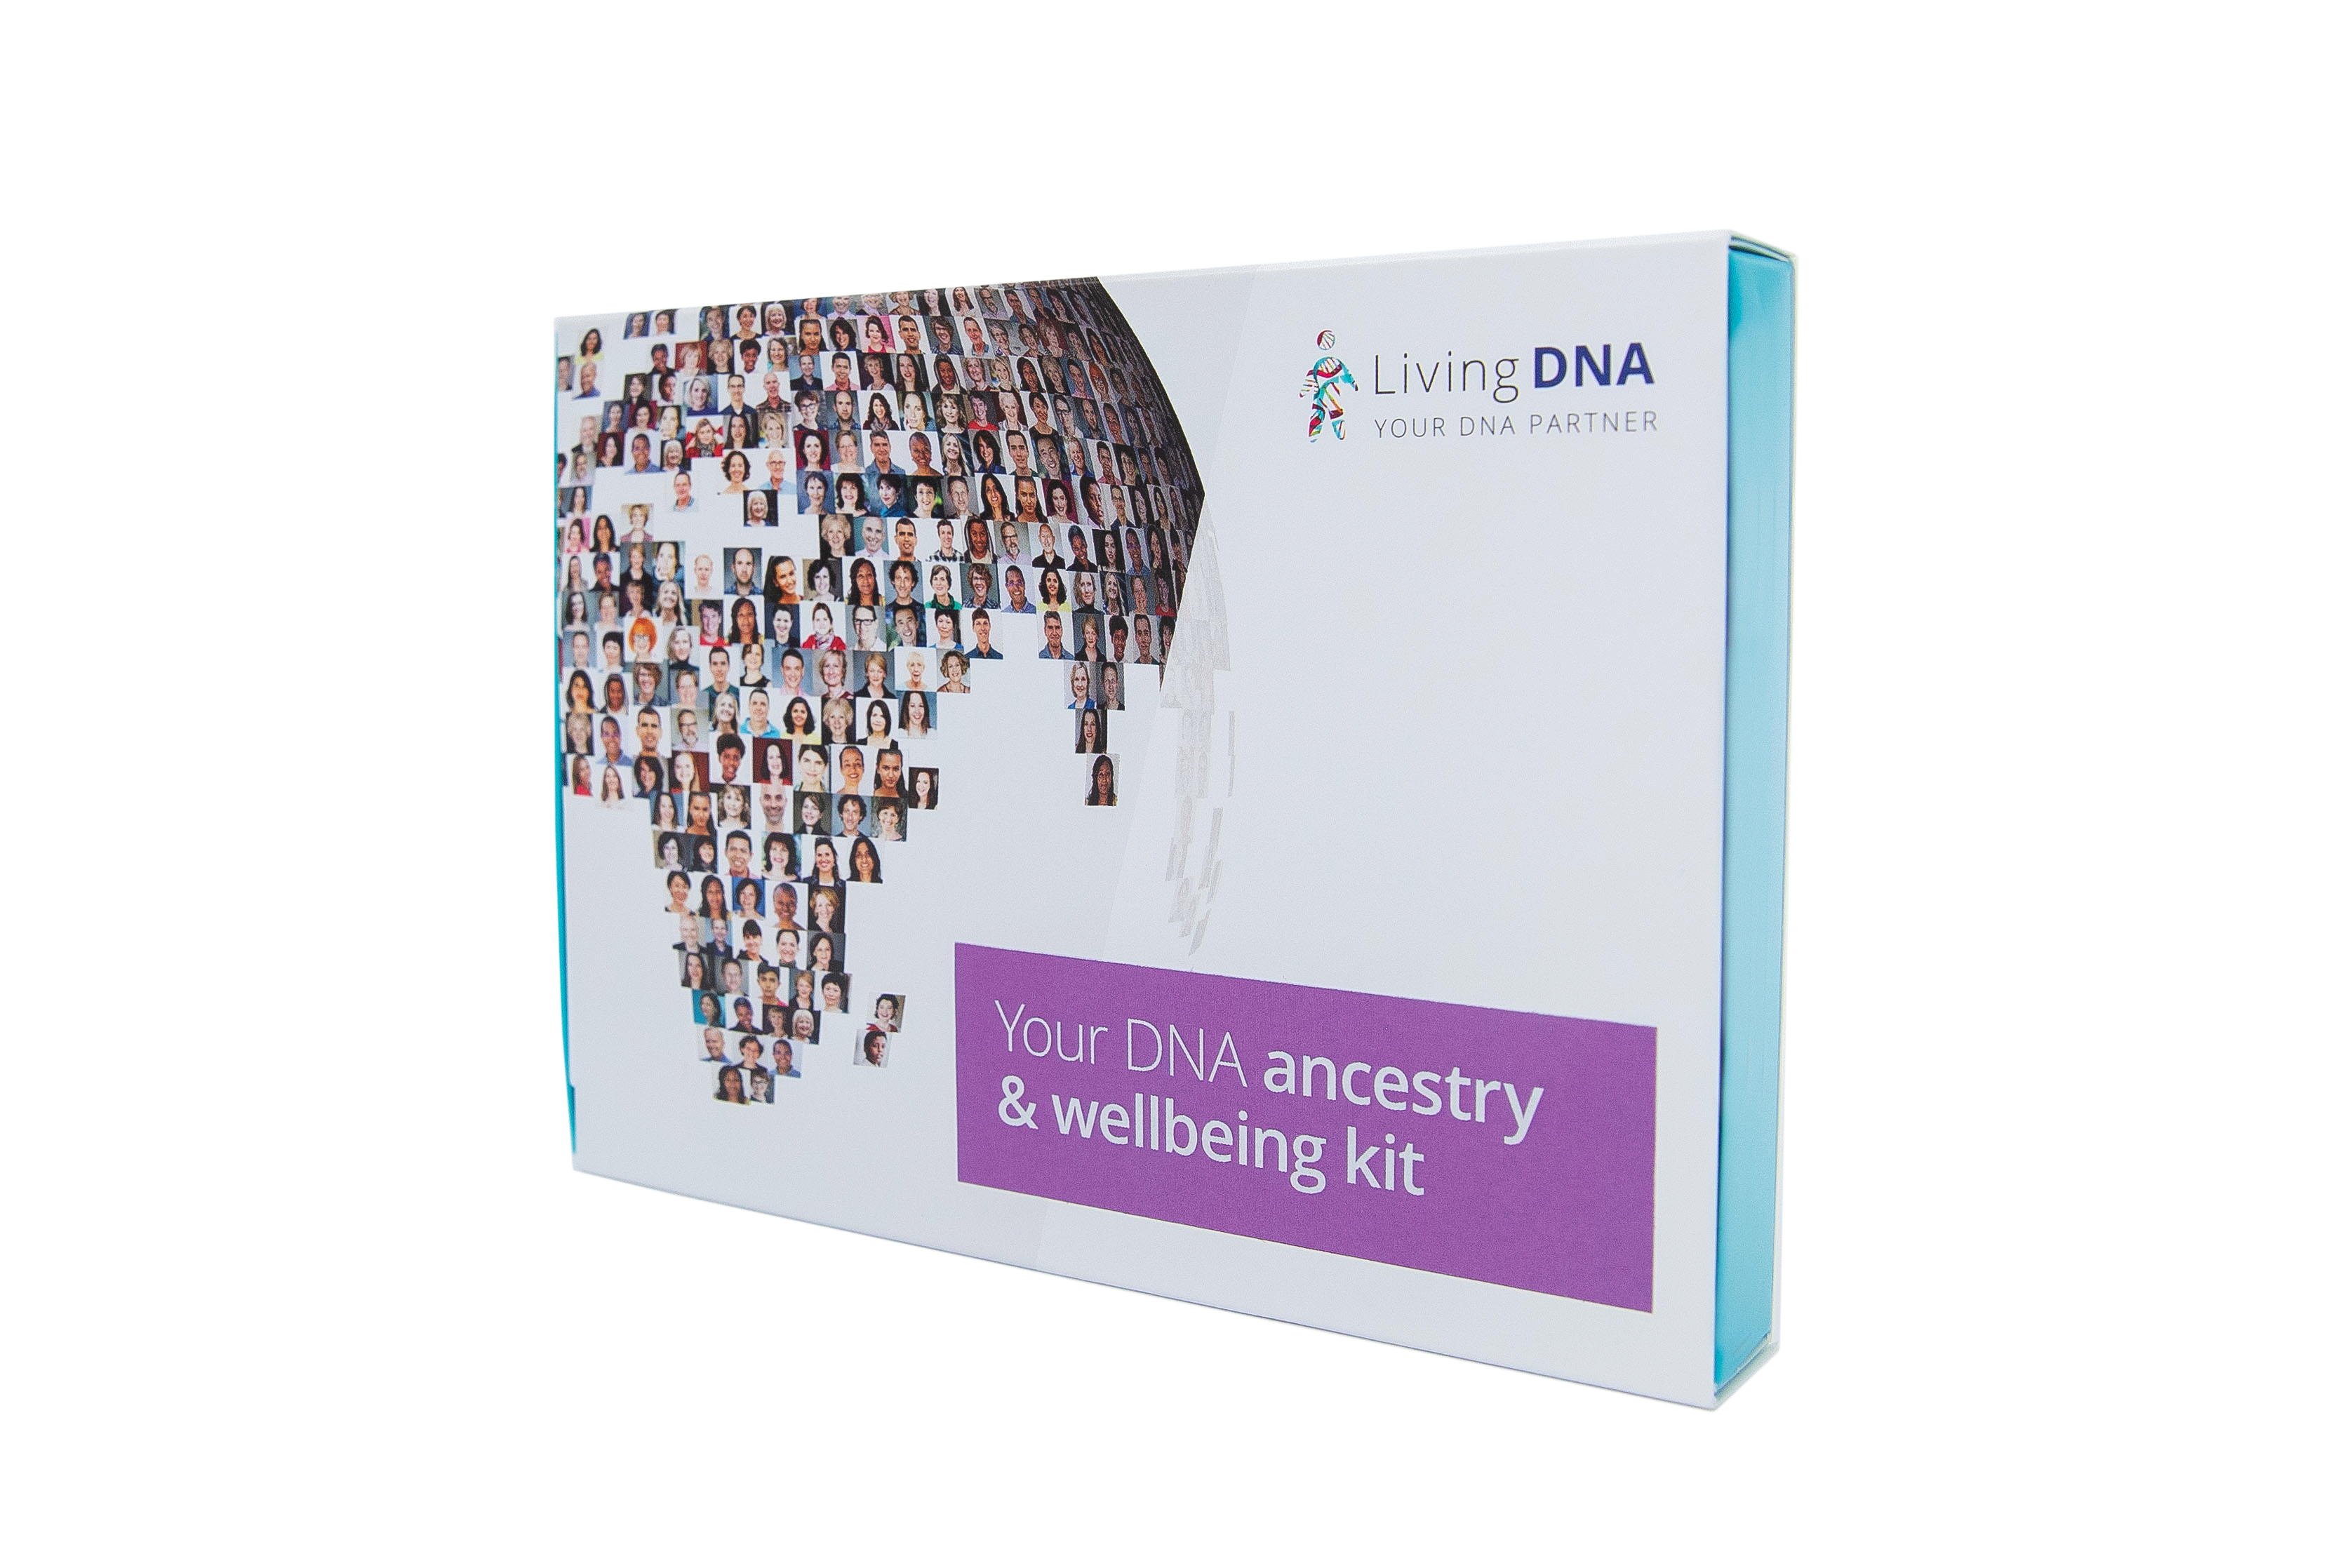 Wellbeing & ancestry kit